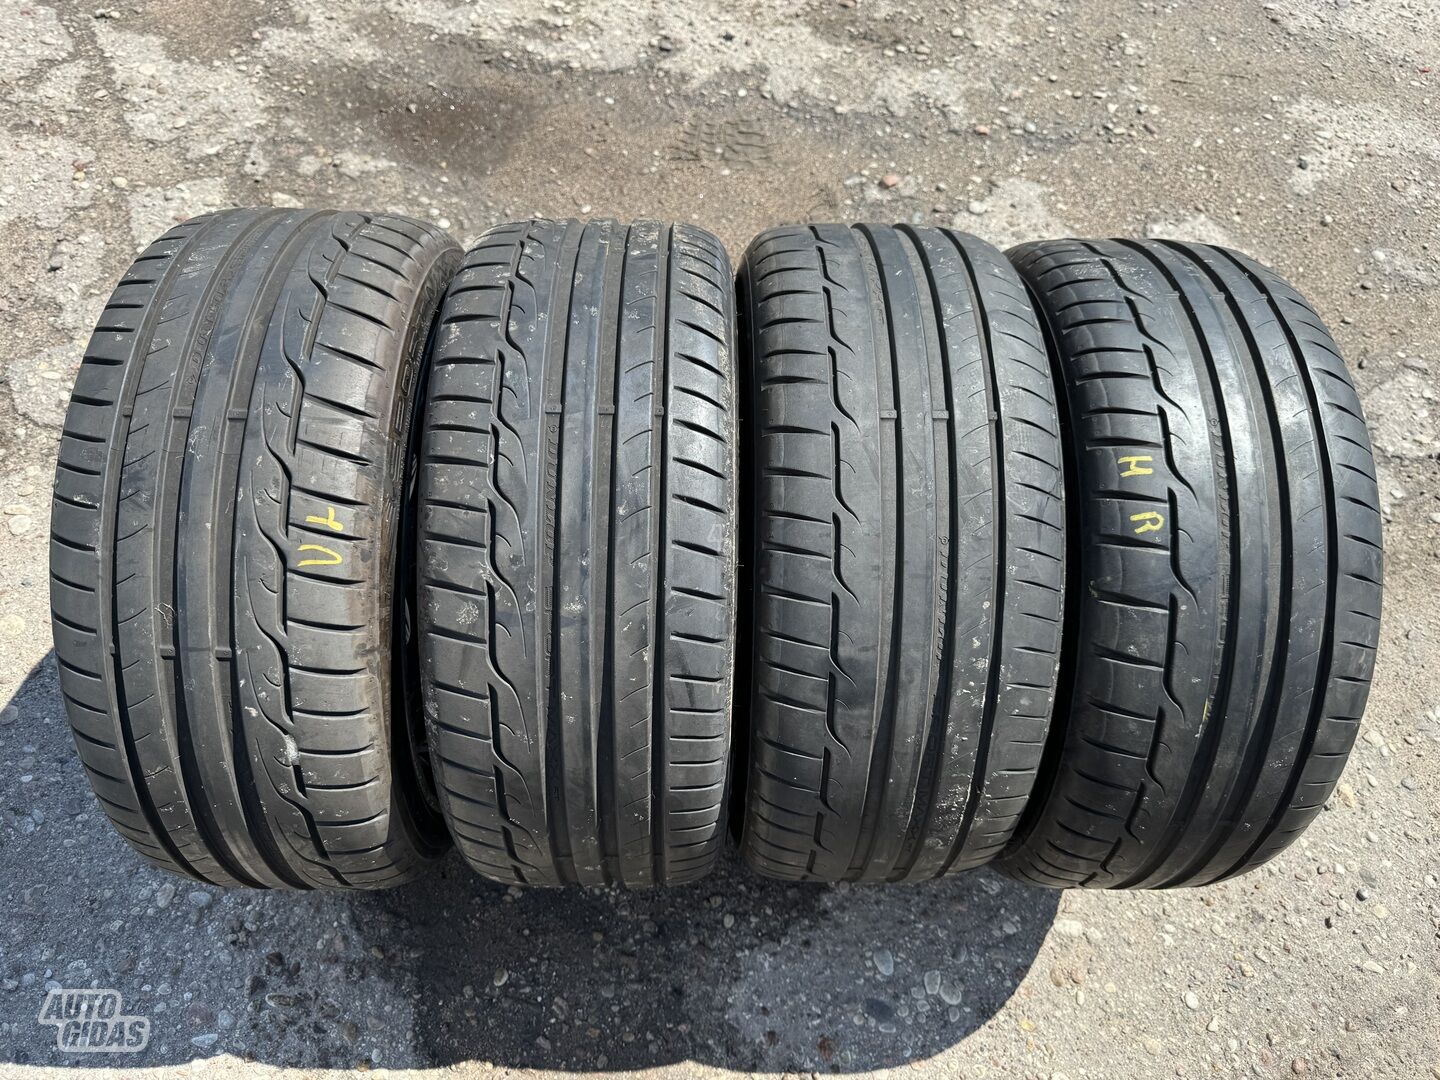 Dunlop Siunciam, 6-7mm 2019 R18 summer tyres passanger car